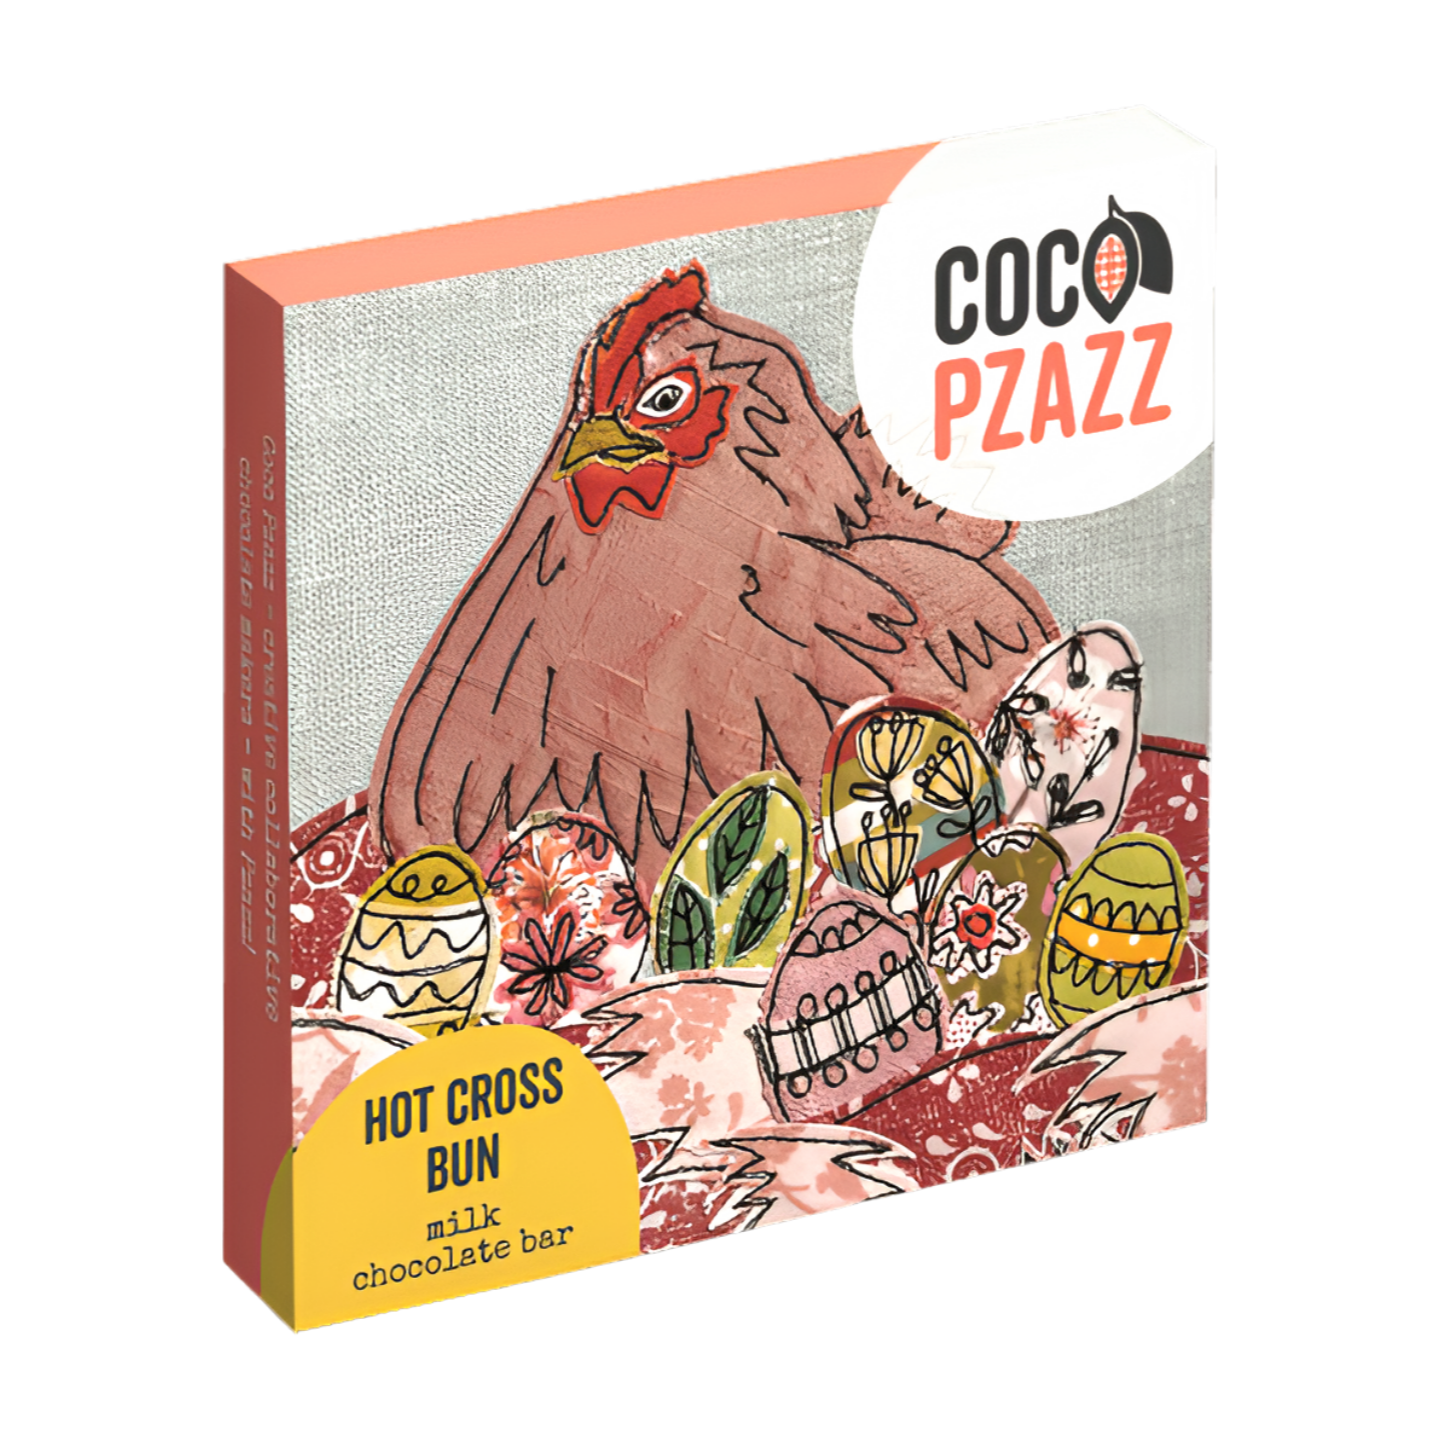 Coco Pzazz "Spring Chickens" Hot Cross Bun Chocolate Bar (12x80g)